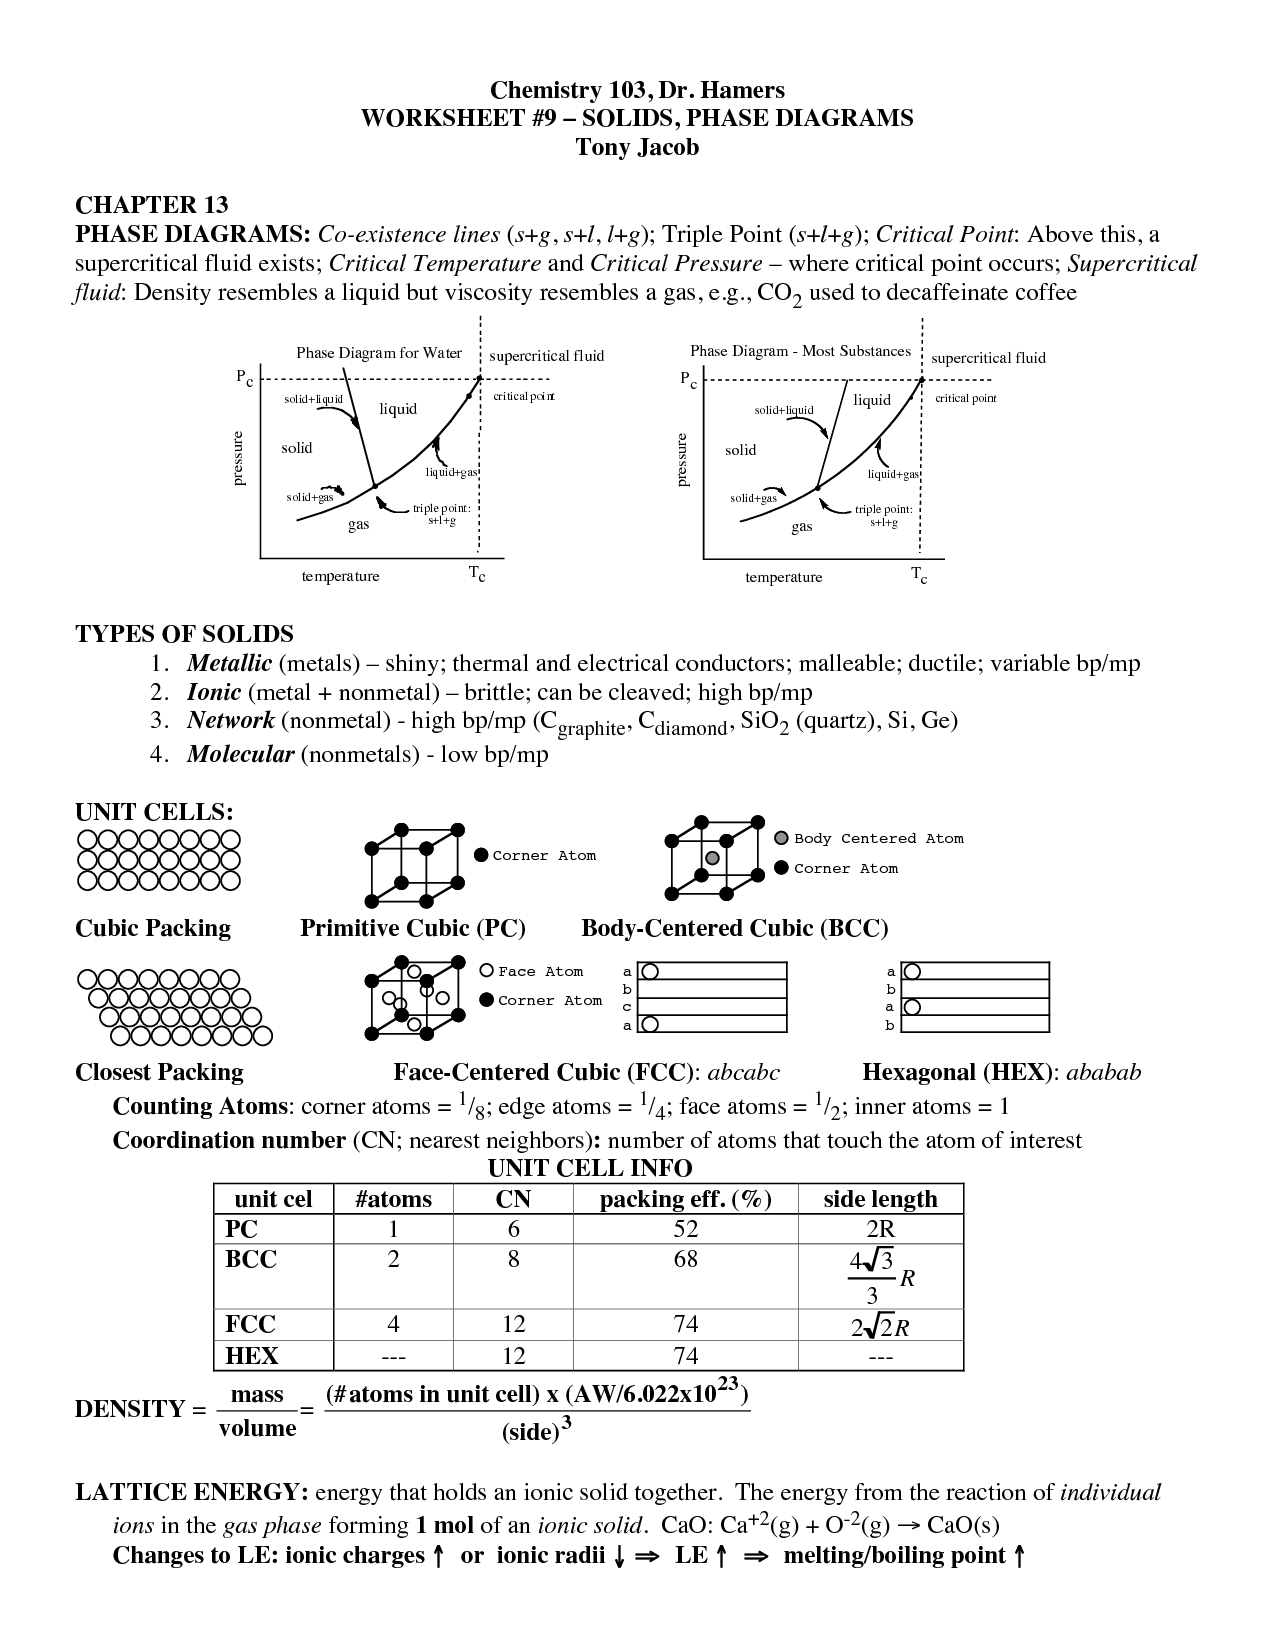 Chemistry Phase Diagram Worksheet